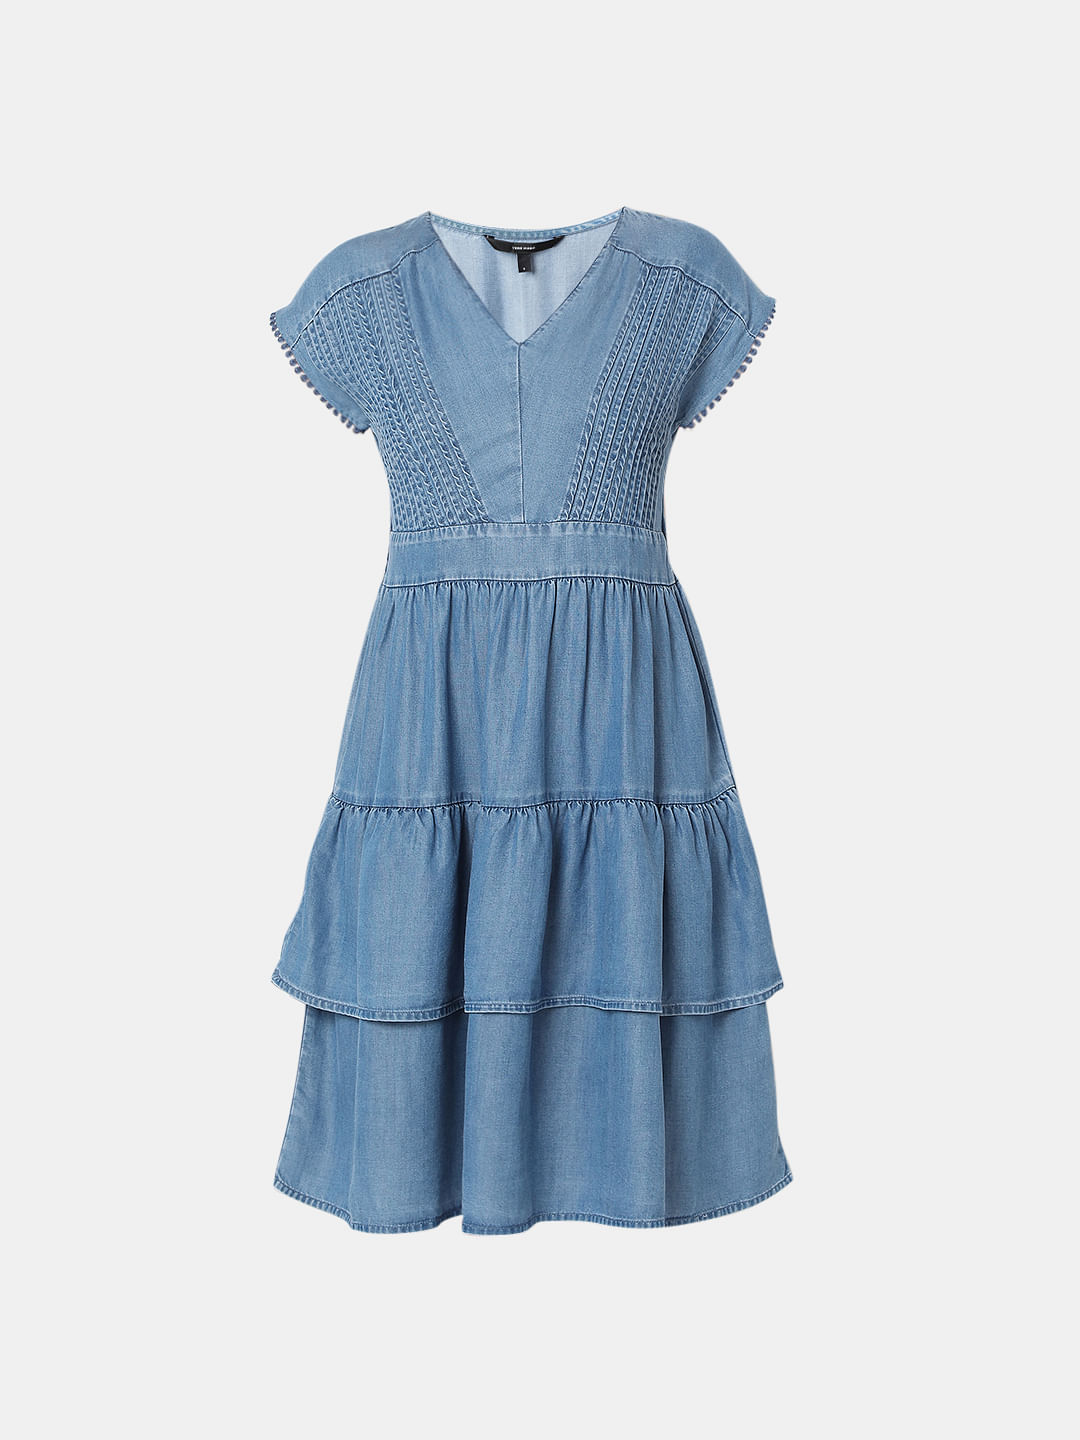 COACH Lightweight Denim Dress in Blue | Lyst